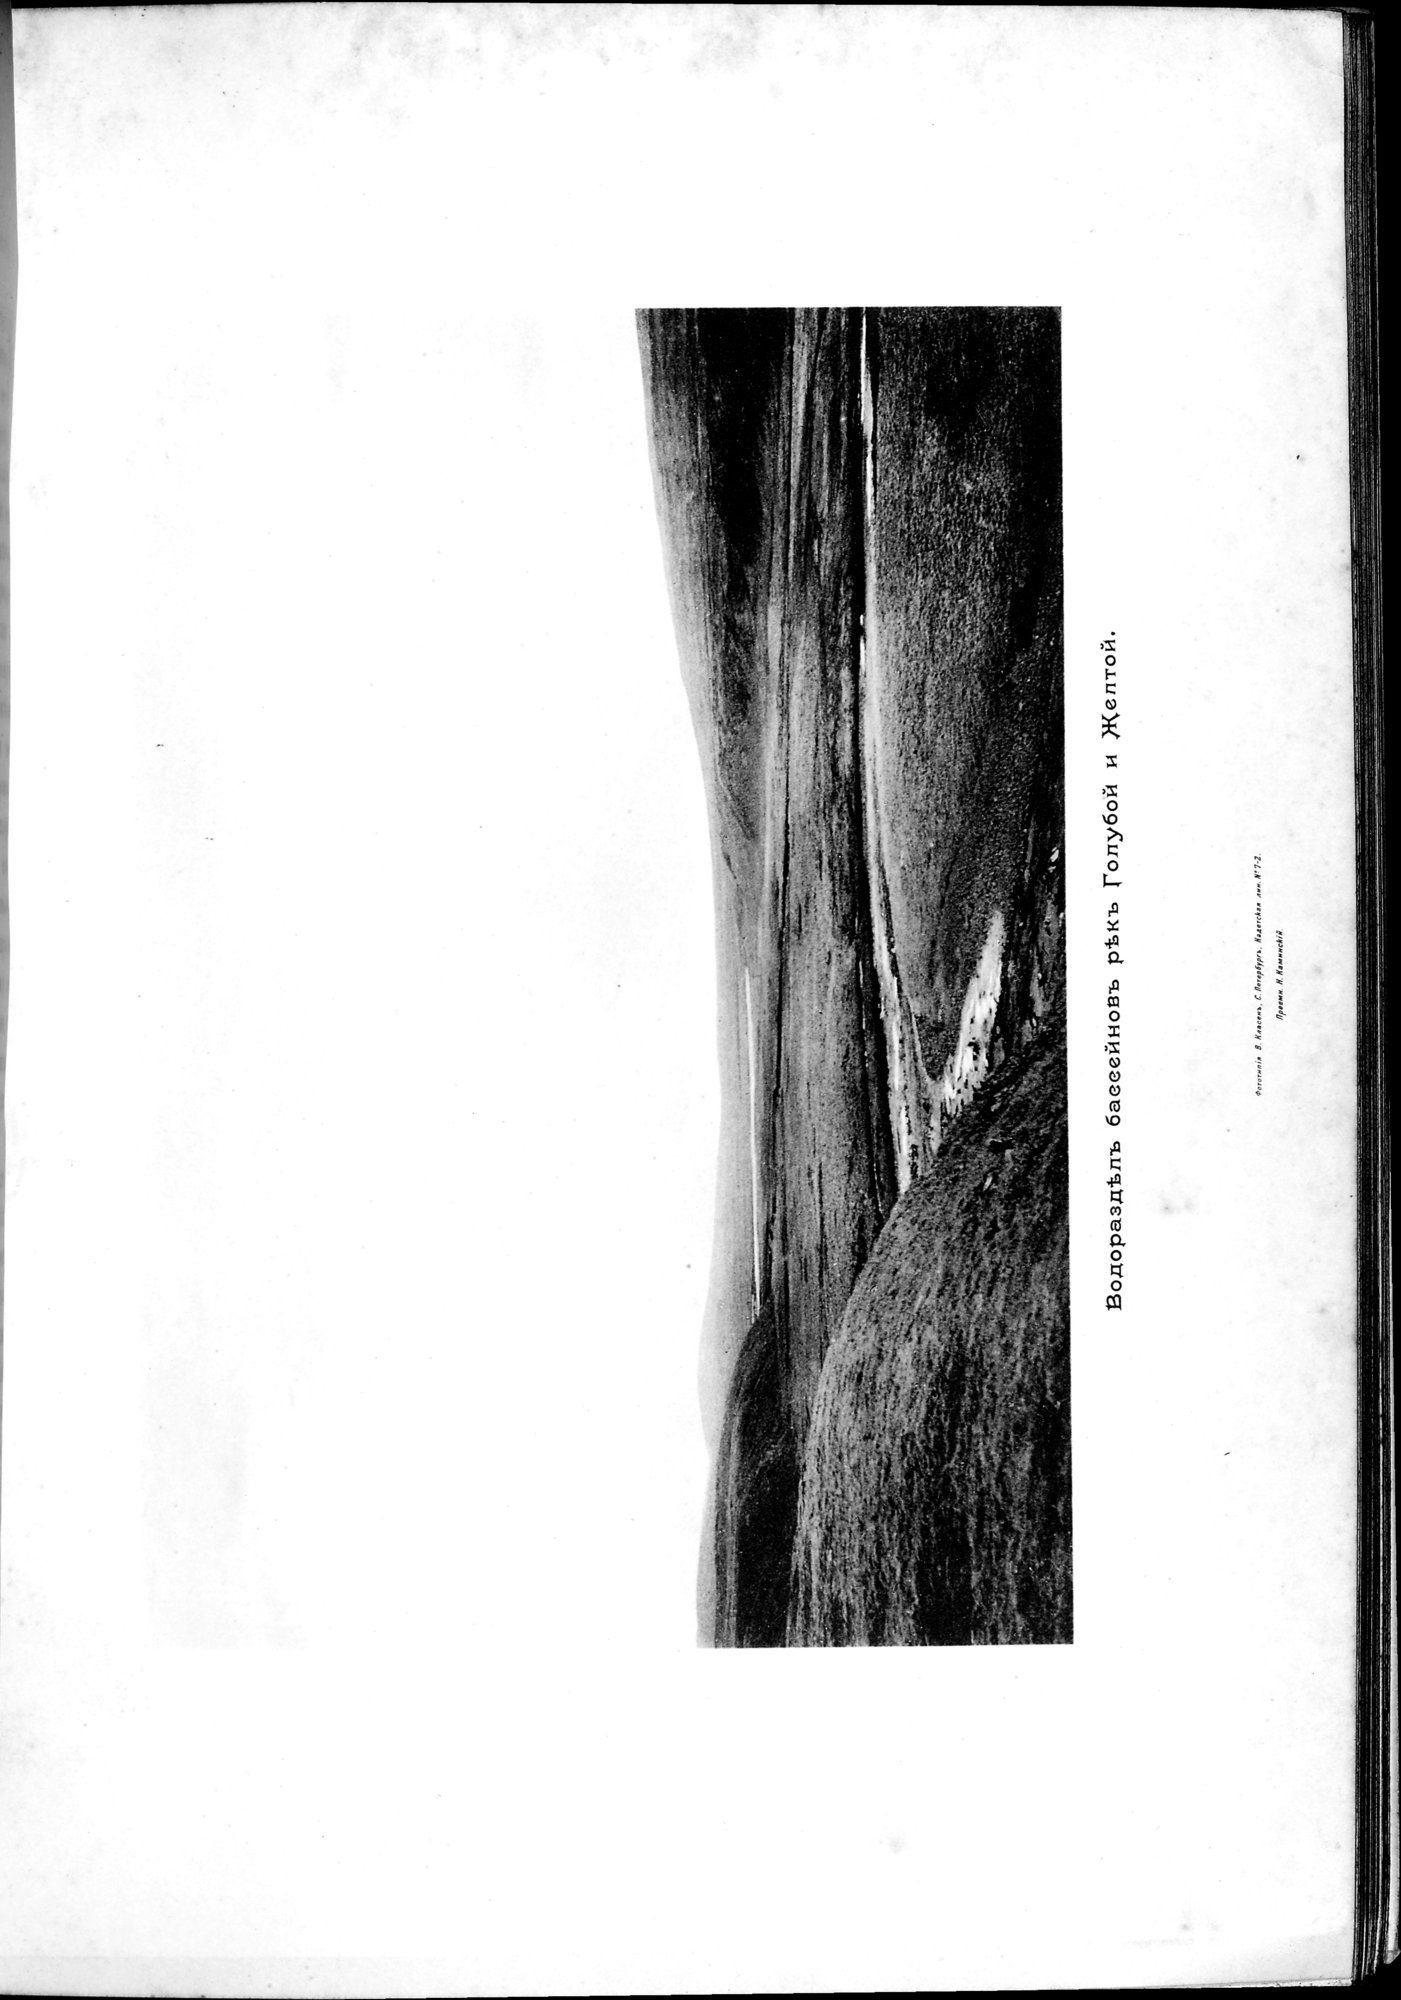 Mongoliia i Kam : vol.2 / Page 413 (Grayscale High Resolution Image)